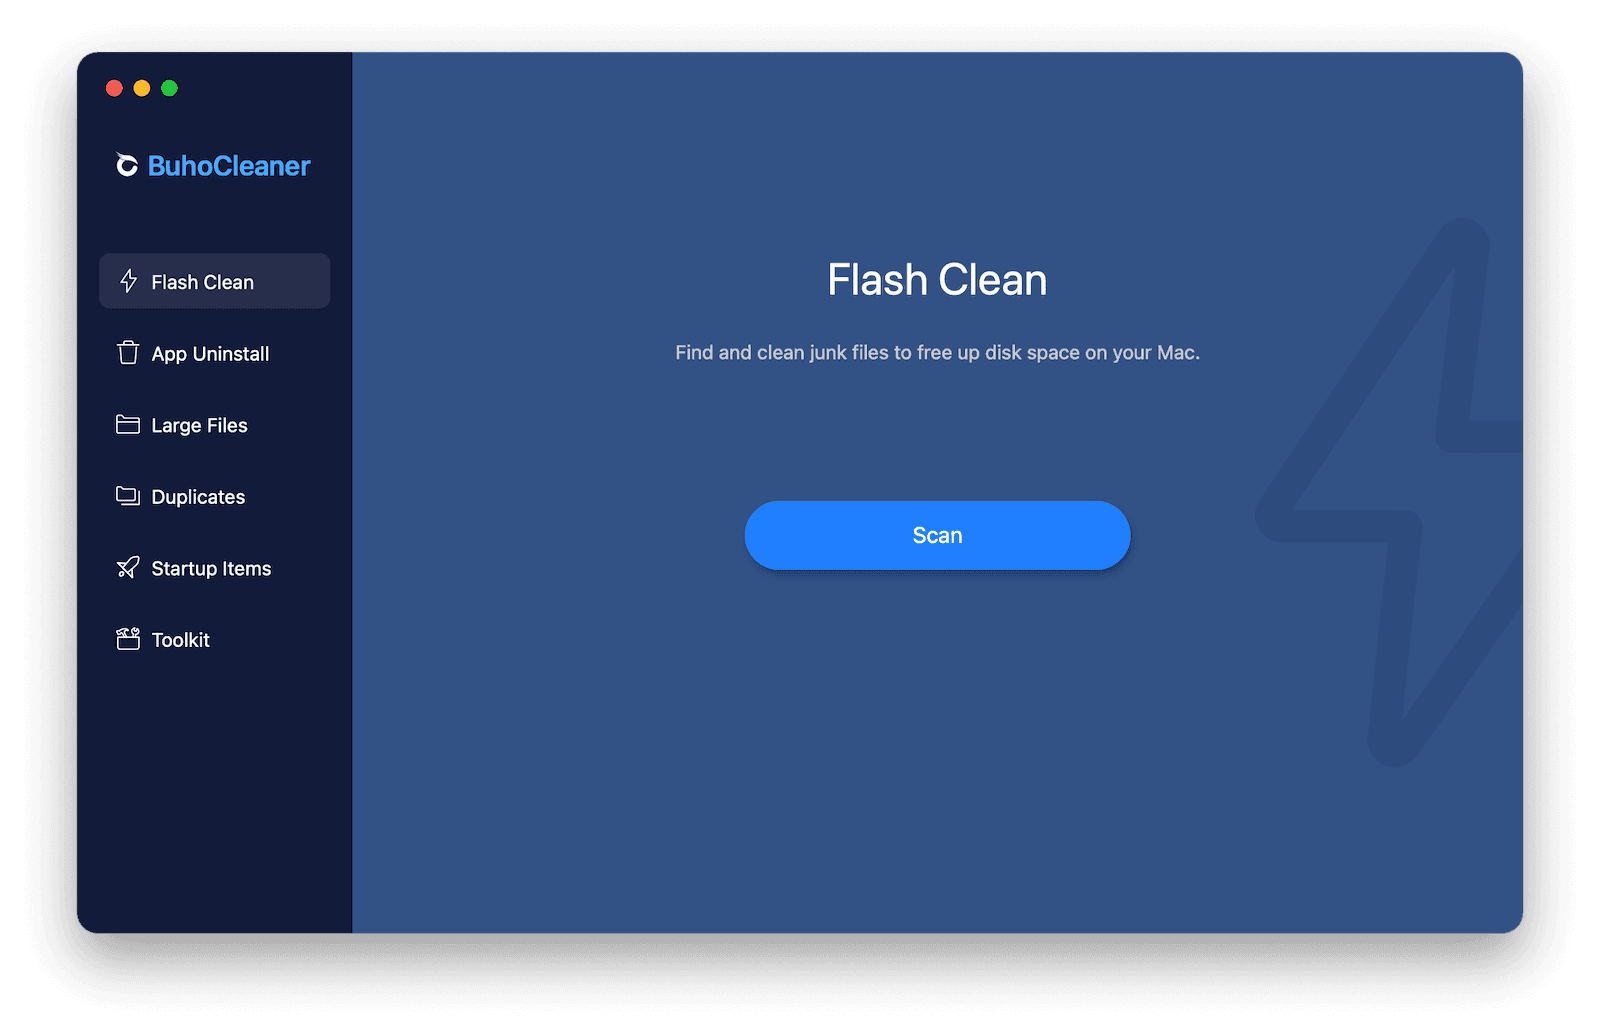 BuhoCleaner Flash Clean